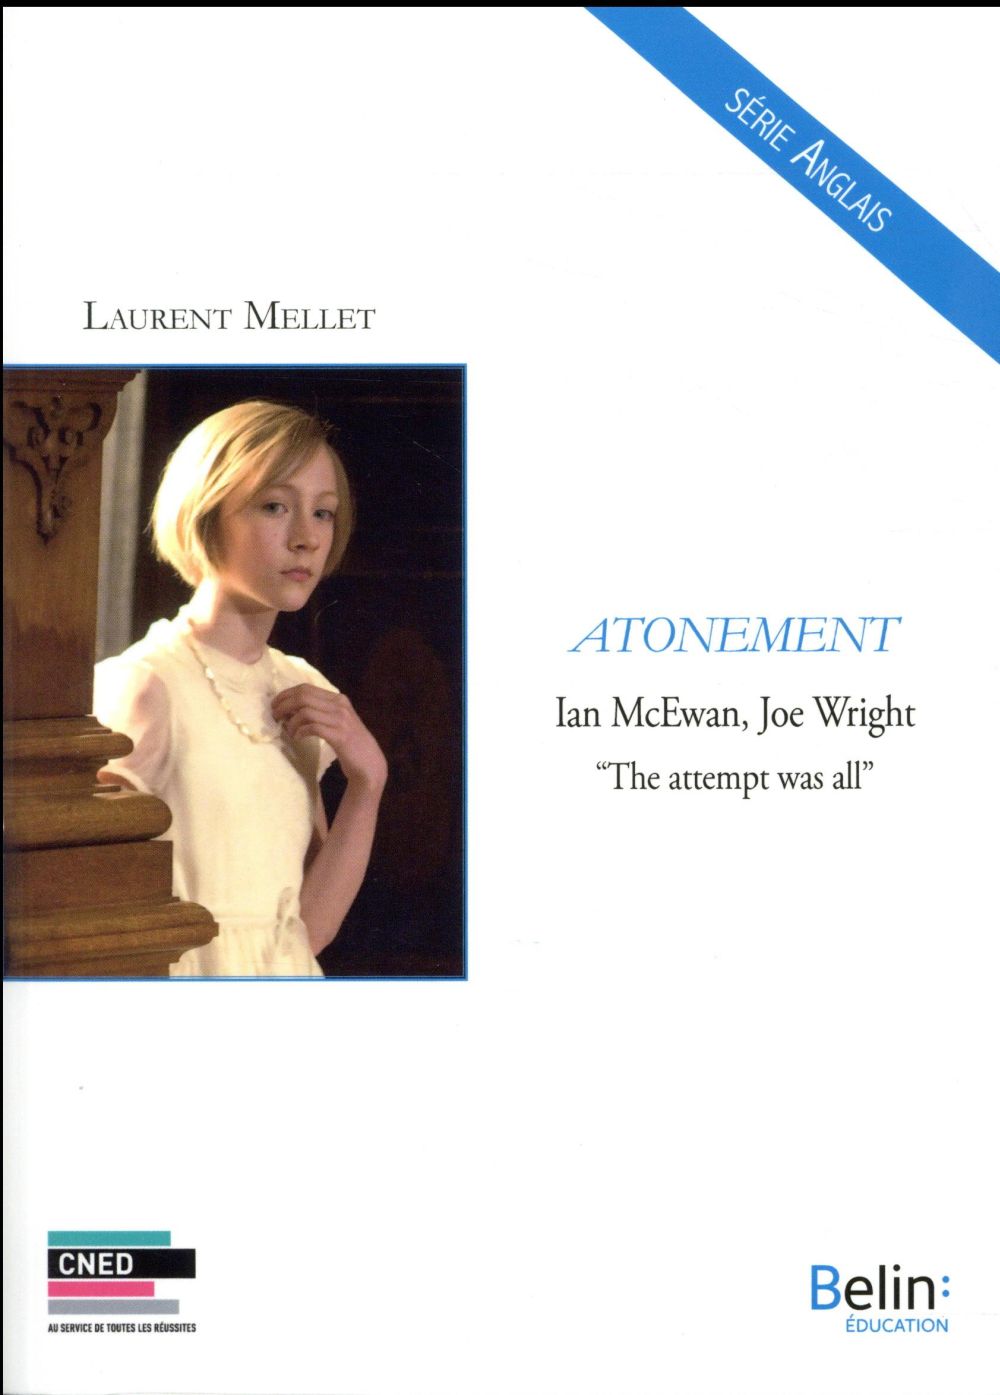 ATONEMENT - IAN MCEWAN, JOE WRIGHT - "THE ATTEMPT WAS ALL"